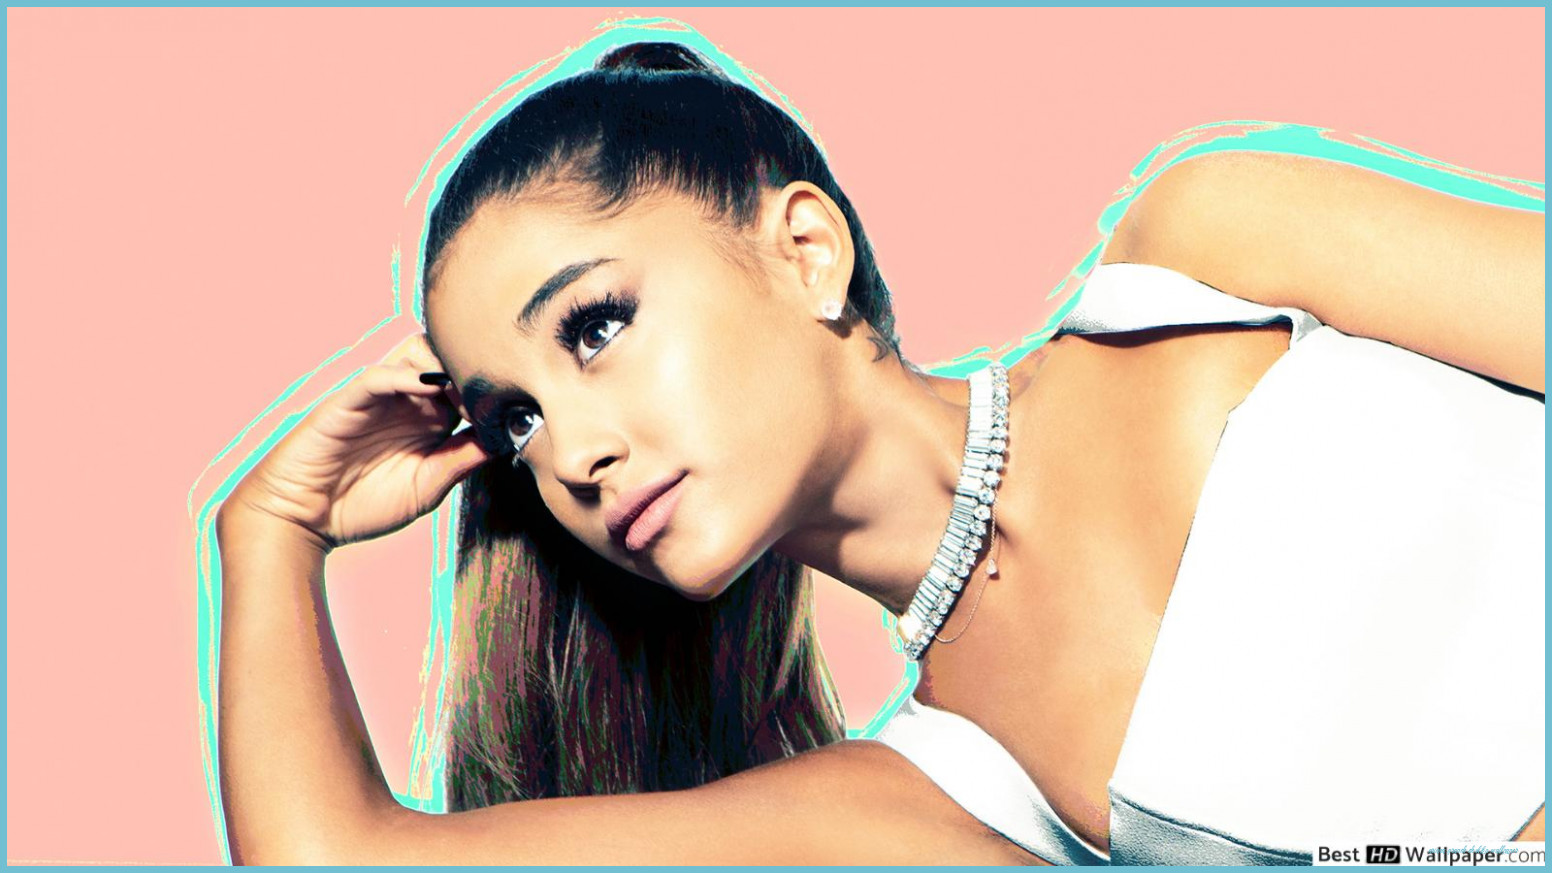 The Miracle Of Ariana Grande Desktop Wallpaper. Ariana Grande Desktop Wallpaper